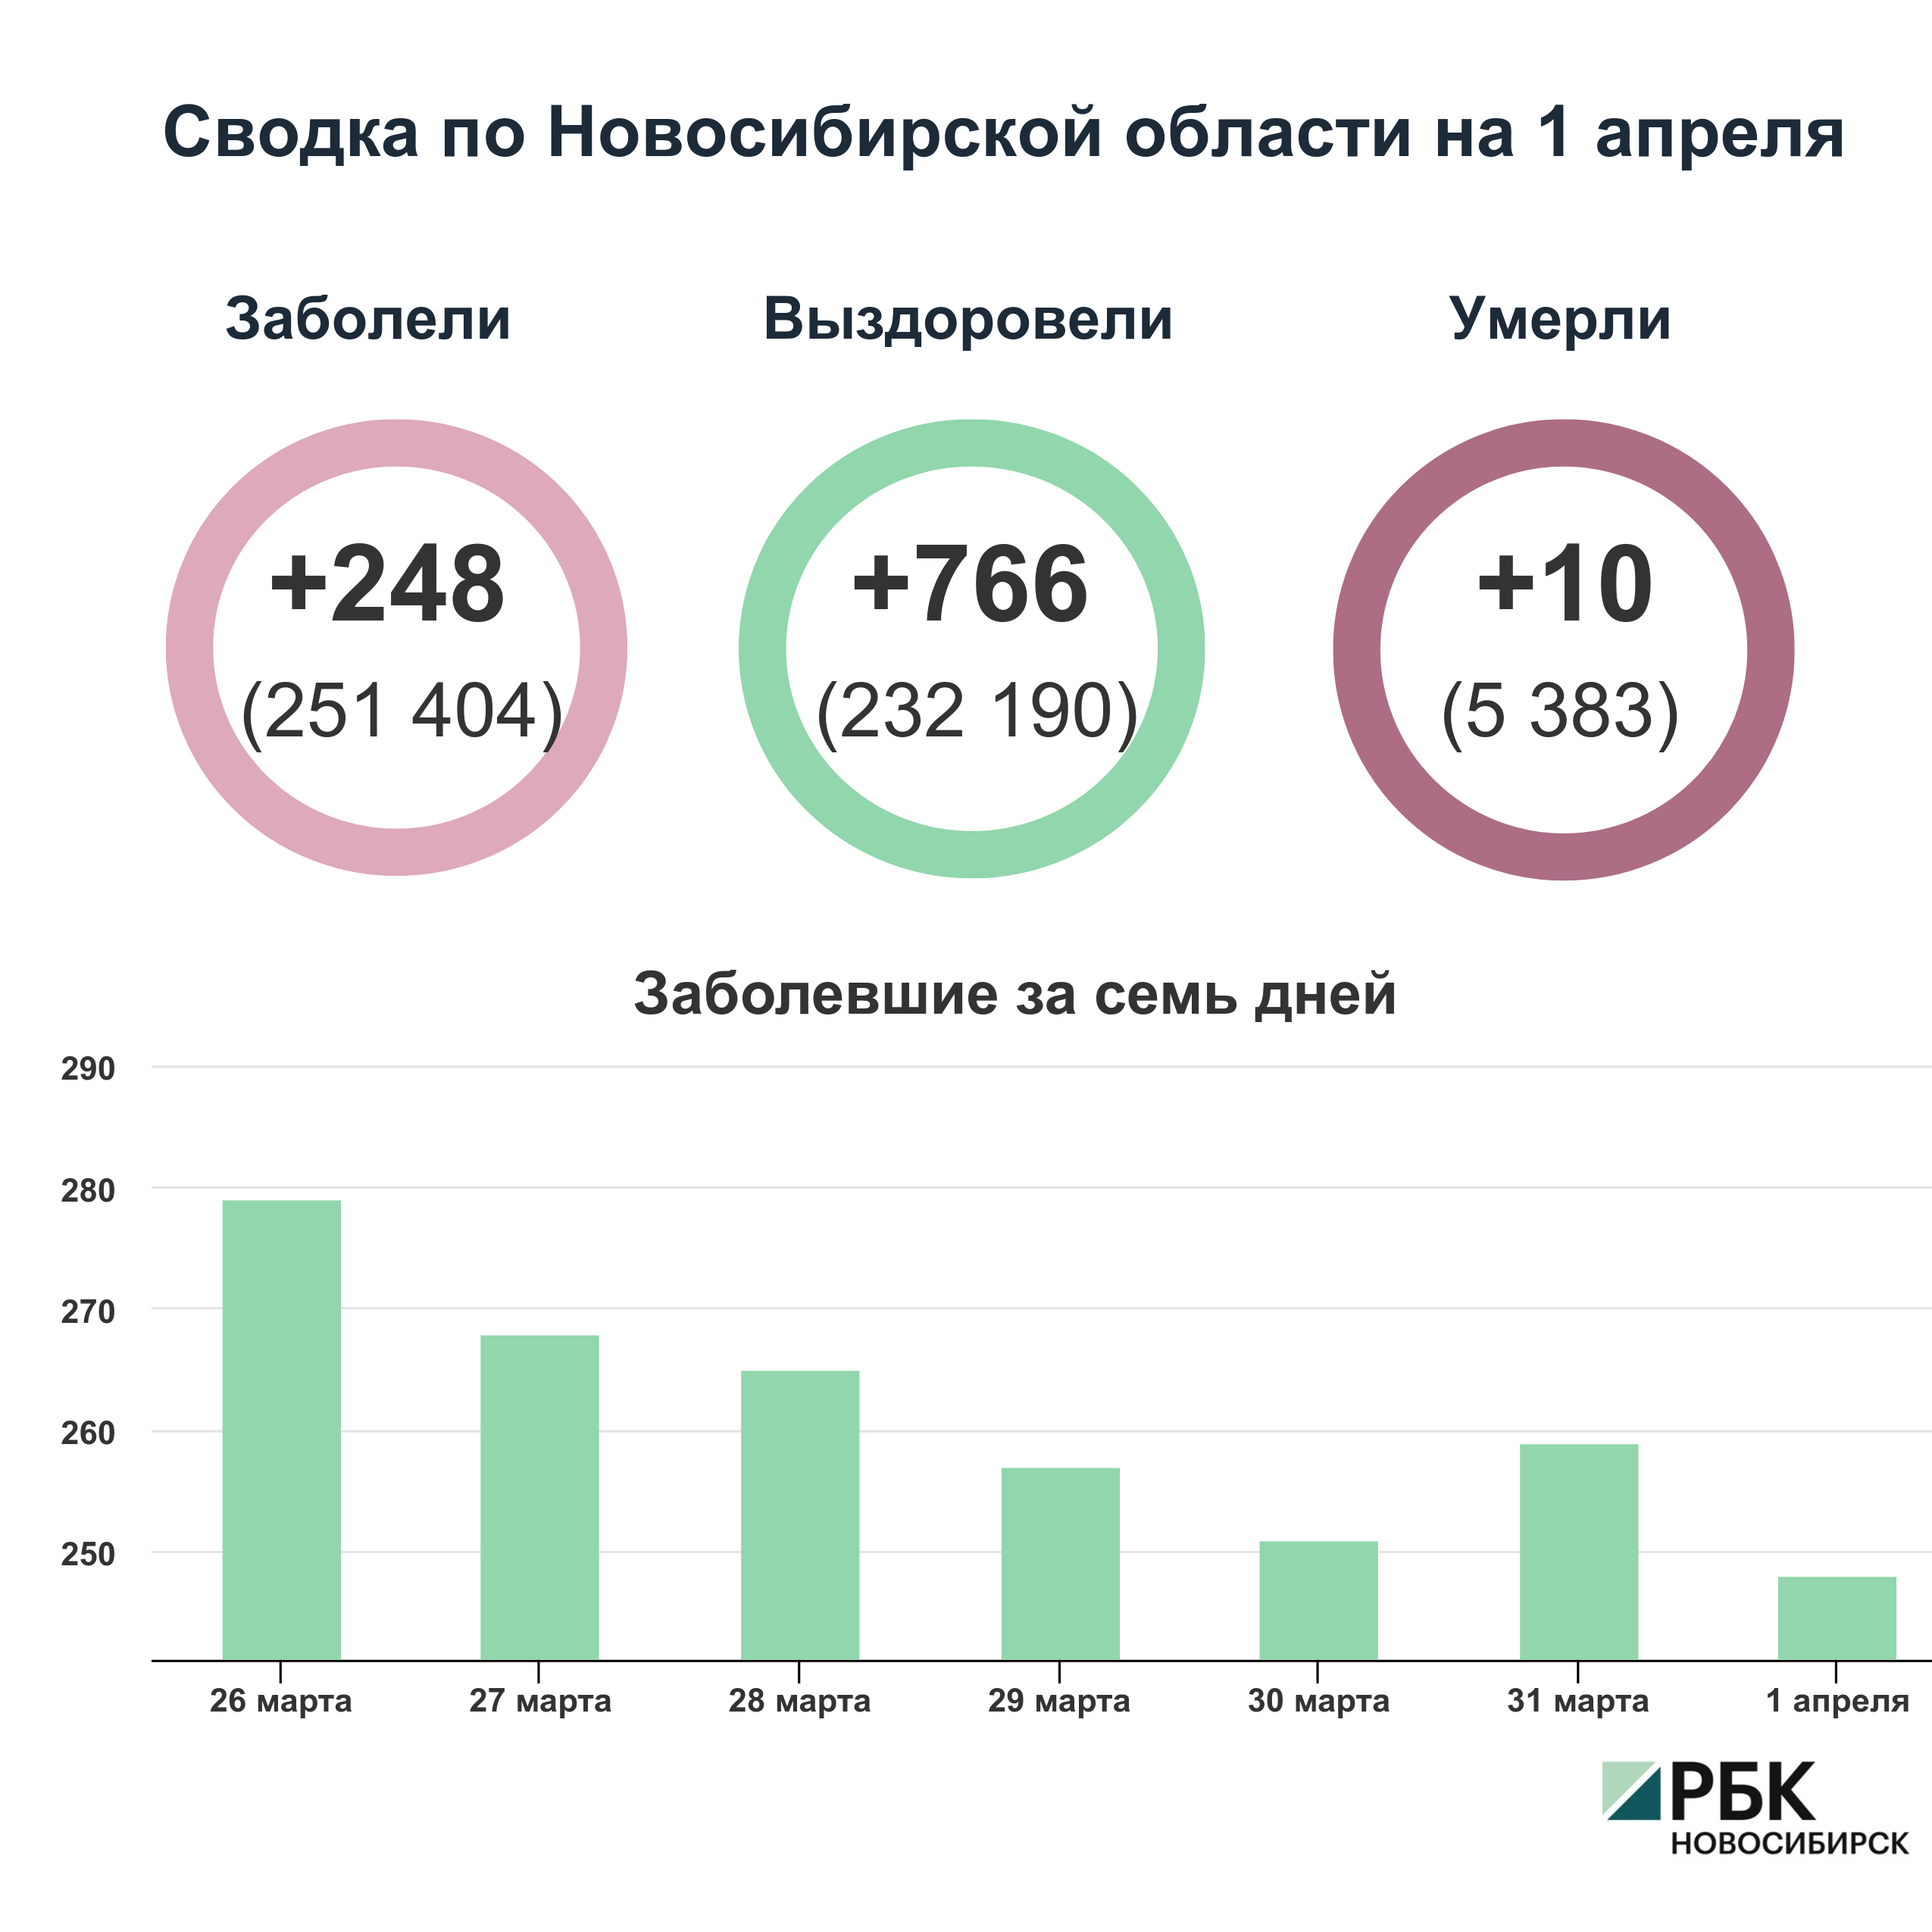 Коронавирус в Новосибирске: сводка на 1 апреля